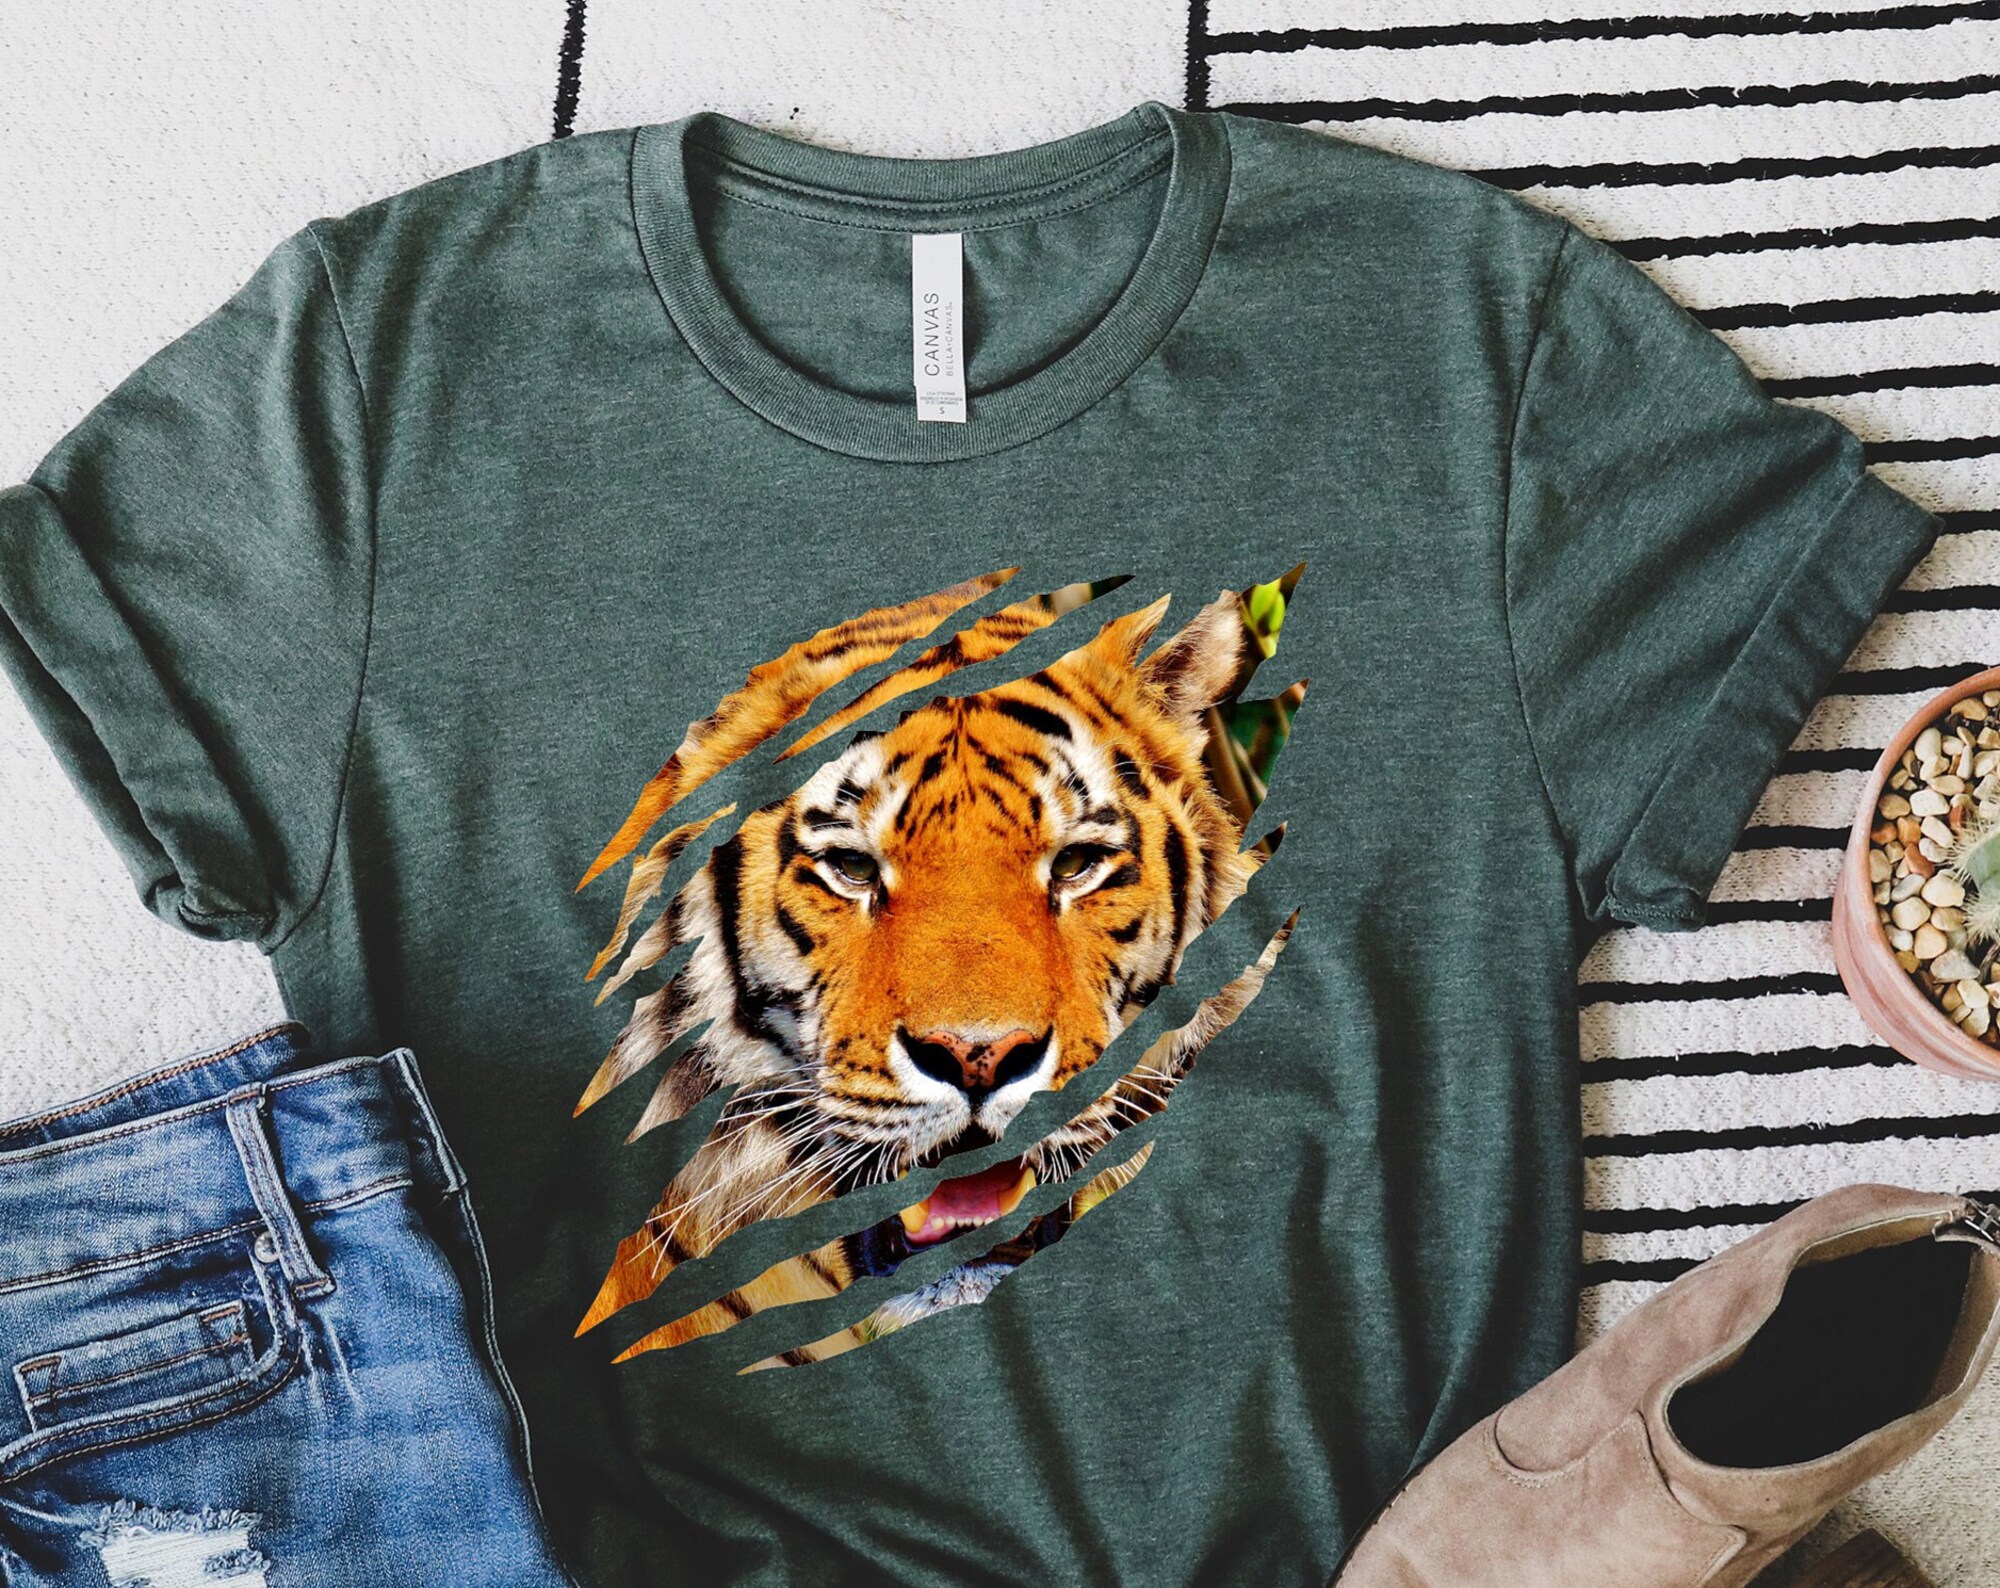 Tiger shirt,  school spirit team, Tiger claw marks, tear, torn, ripped, School mascot shirt